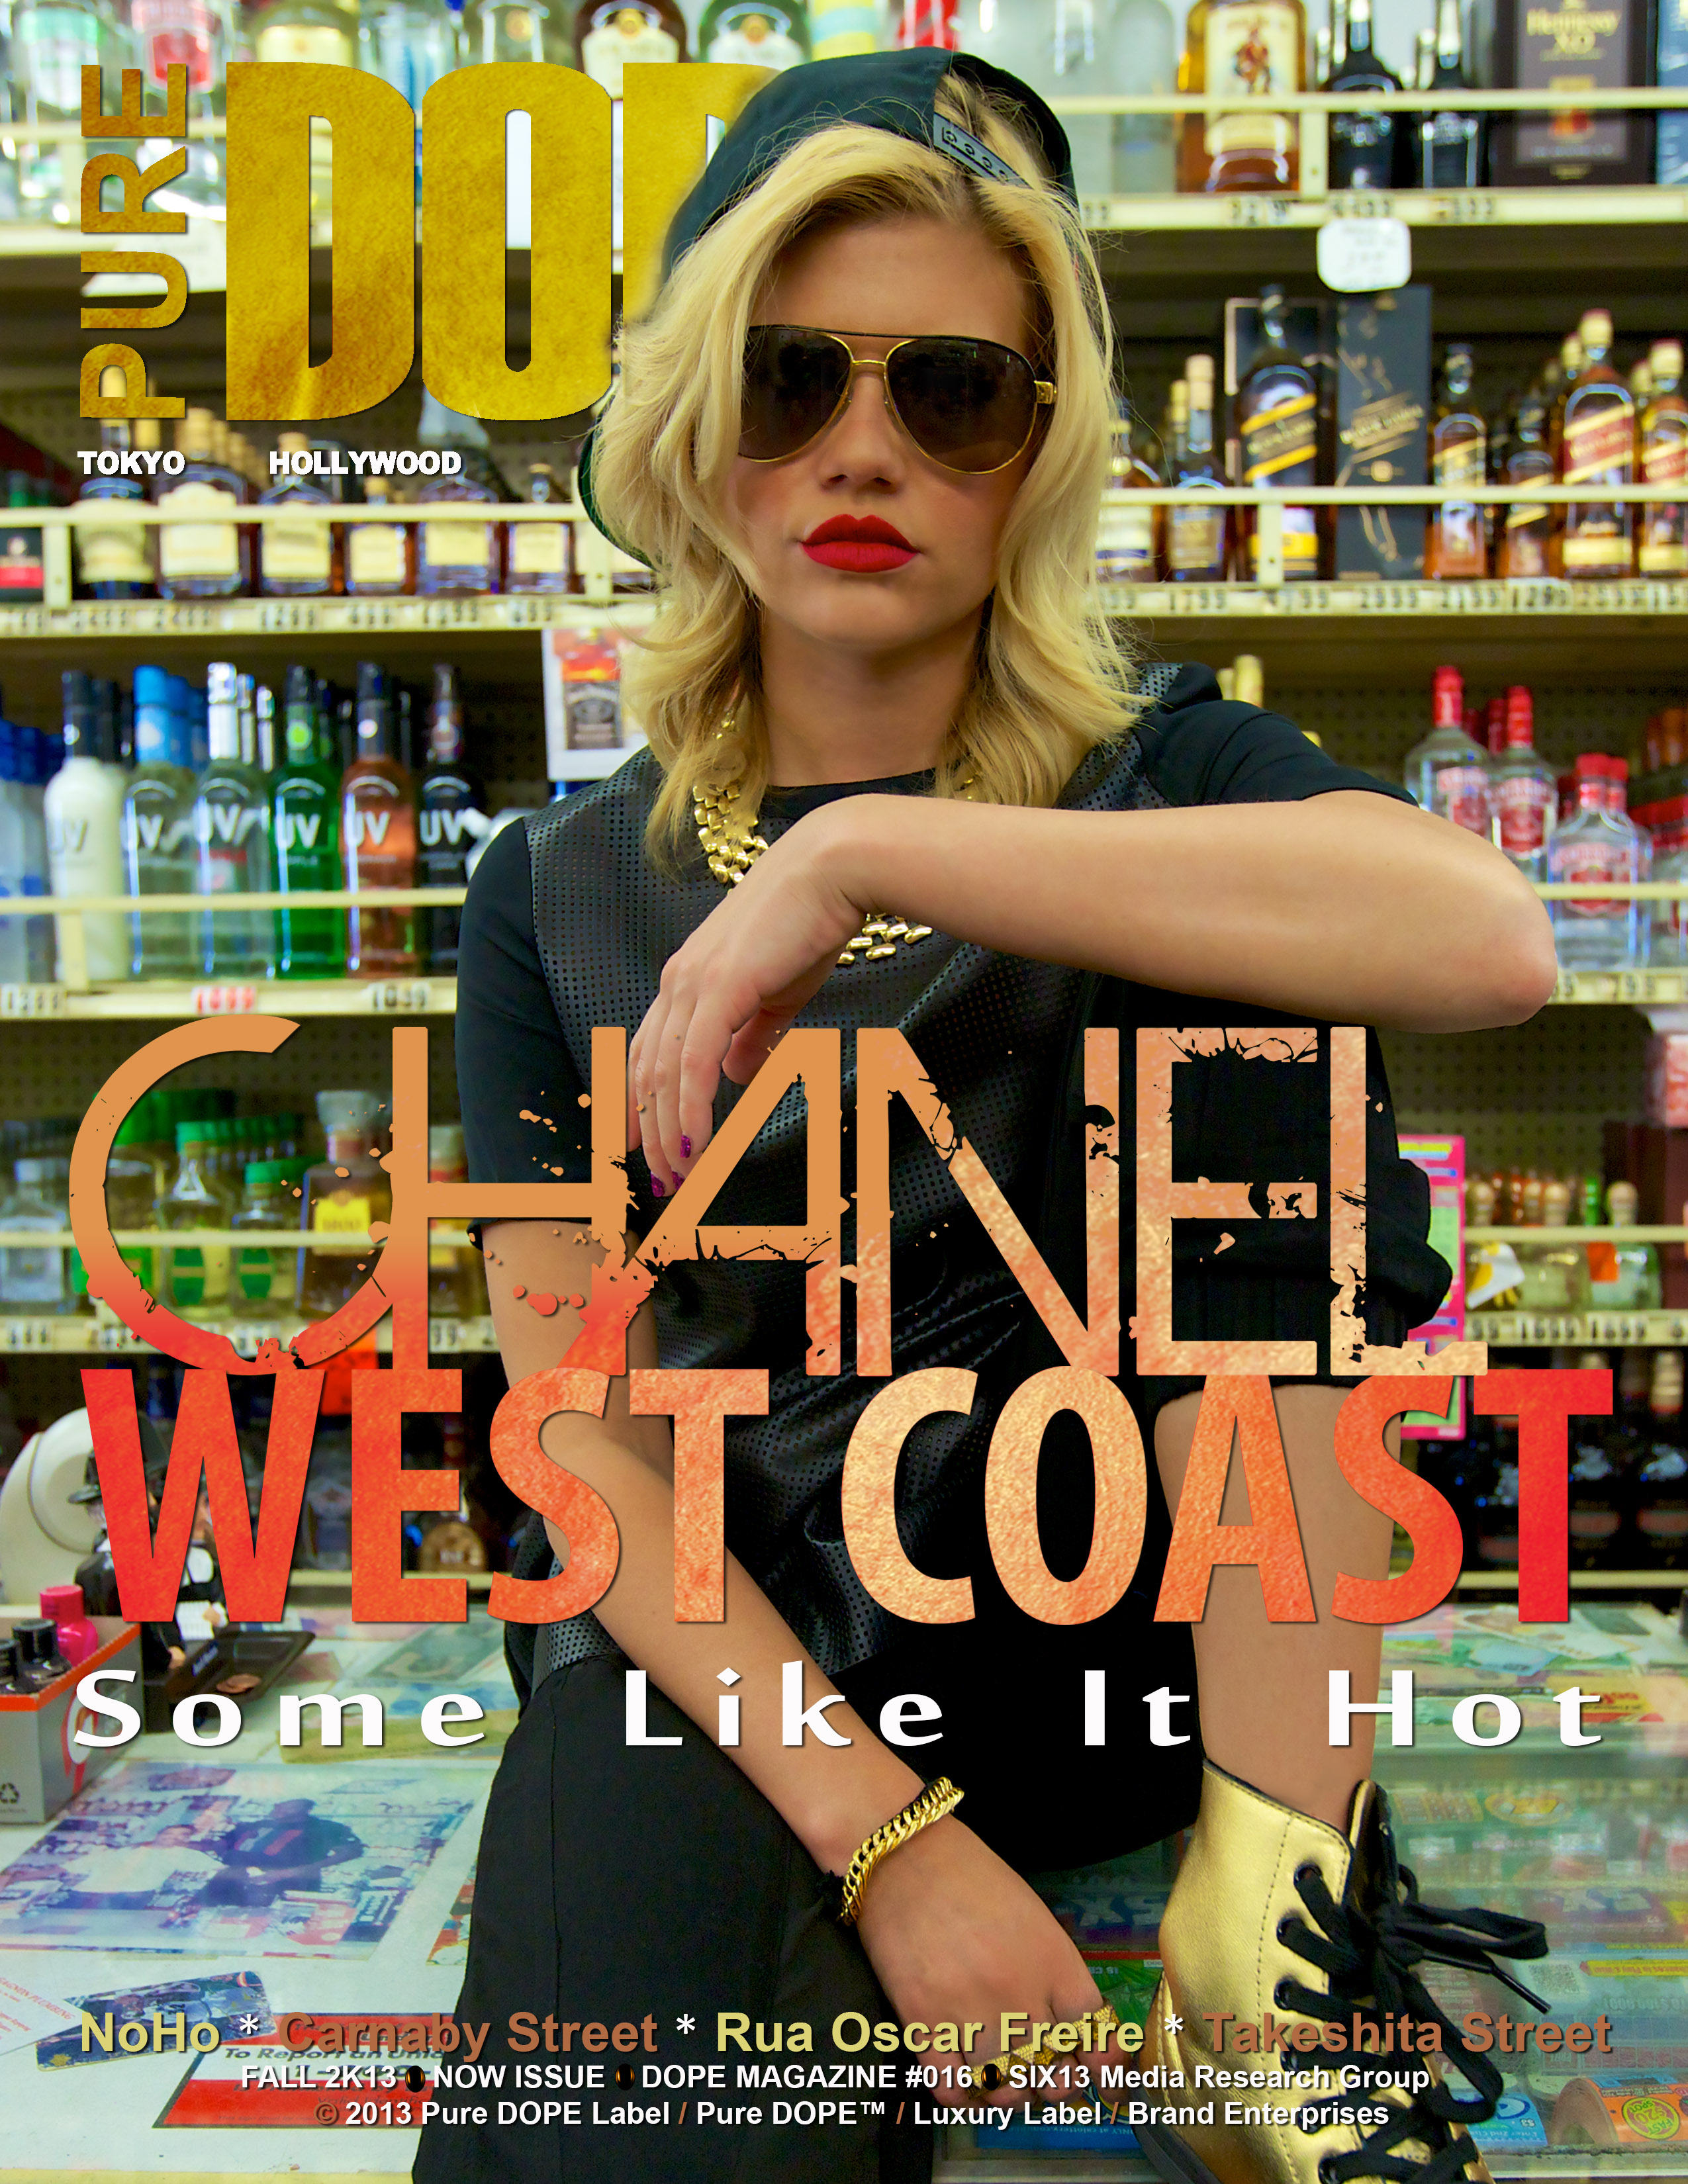 Chanel West Coast HD Wallpaper - WallpaperSafari